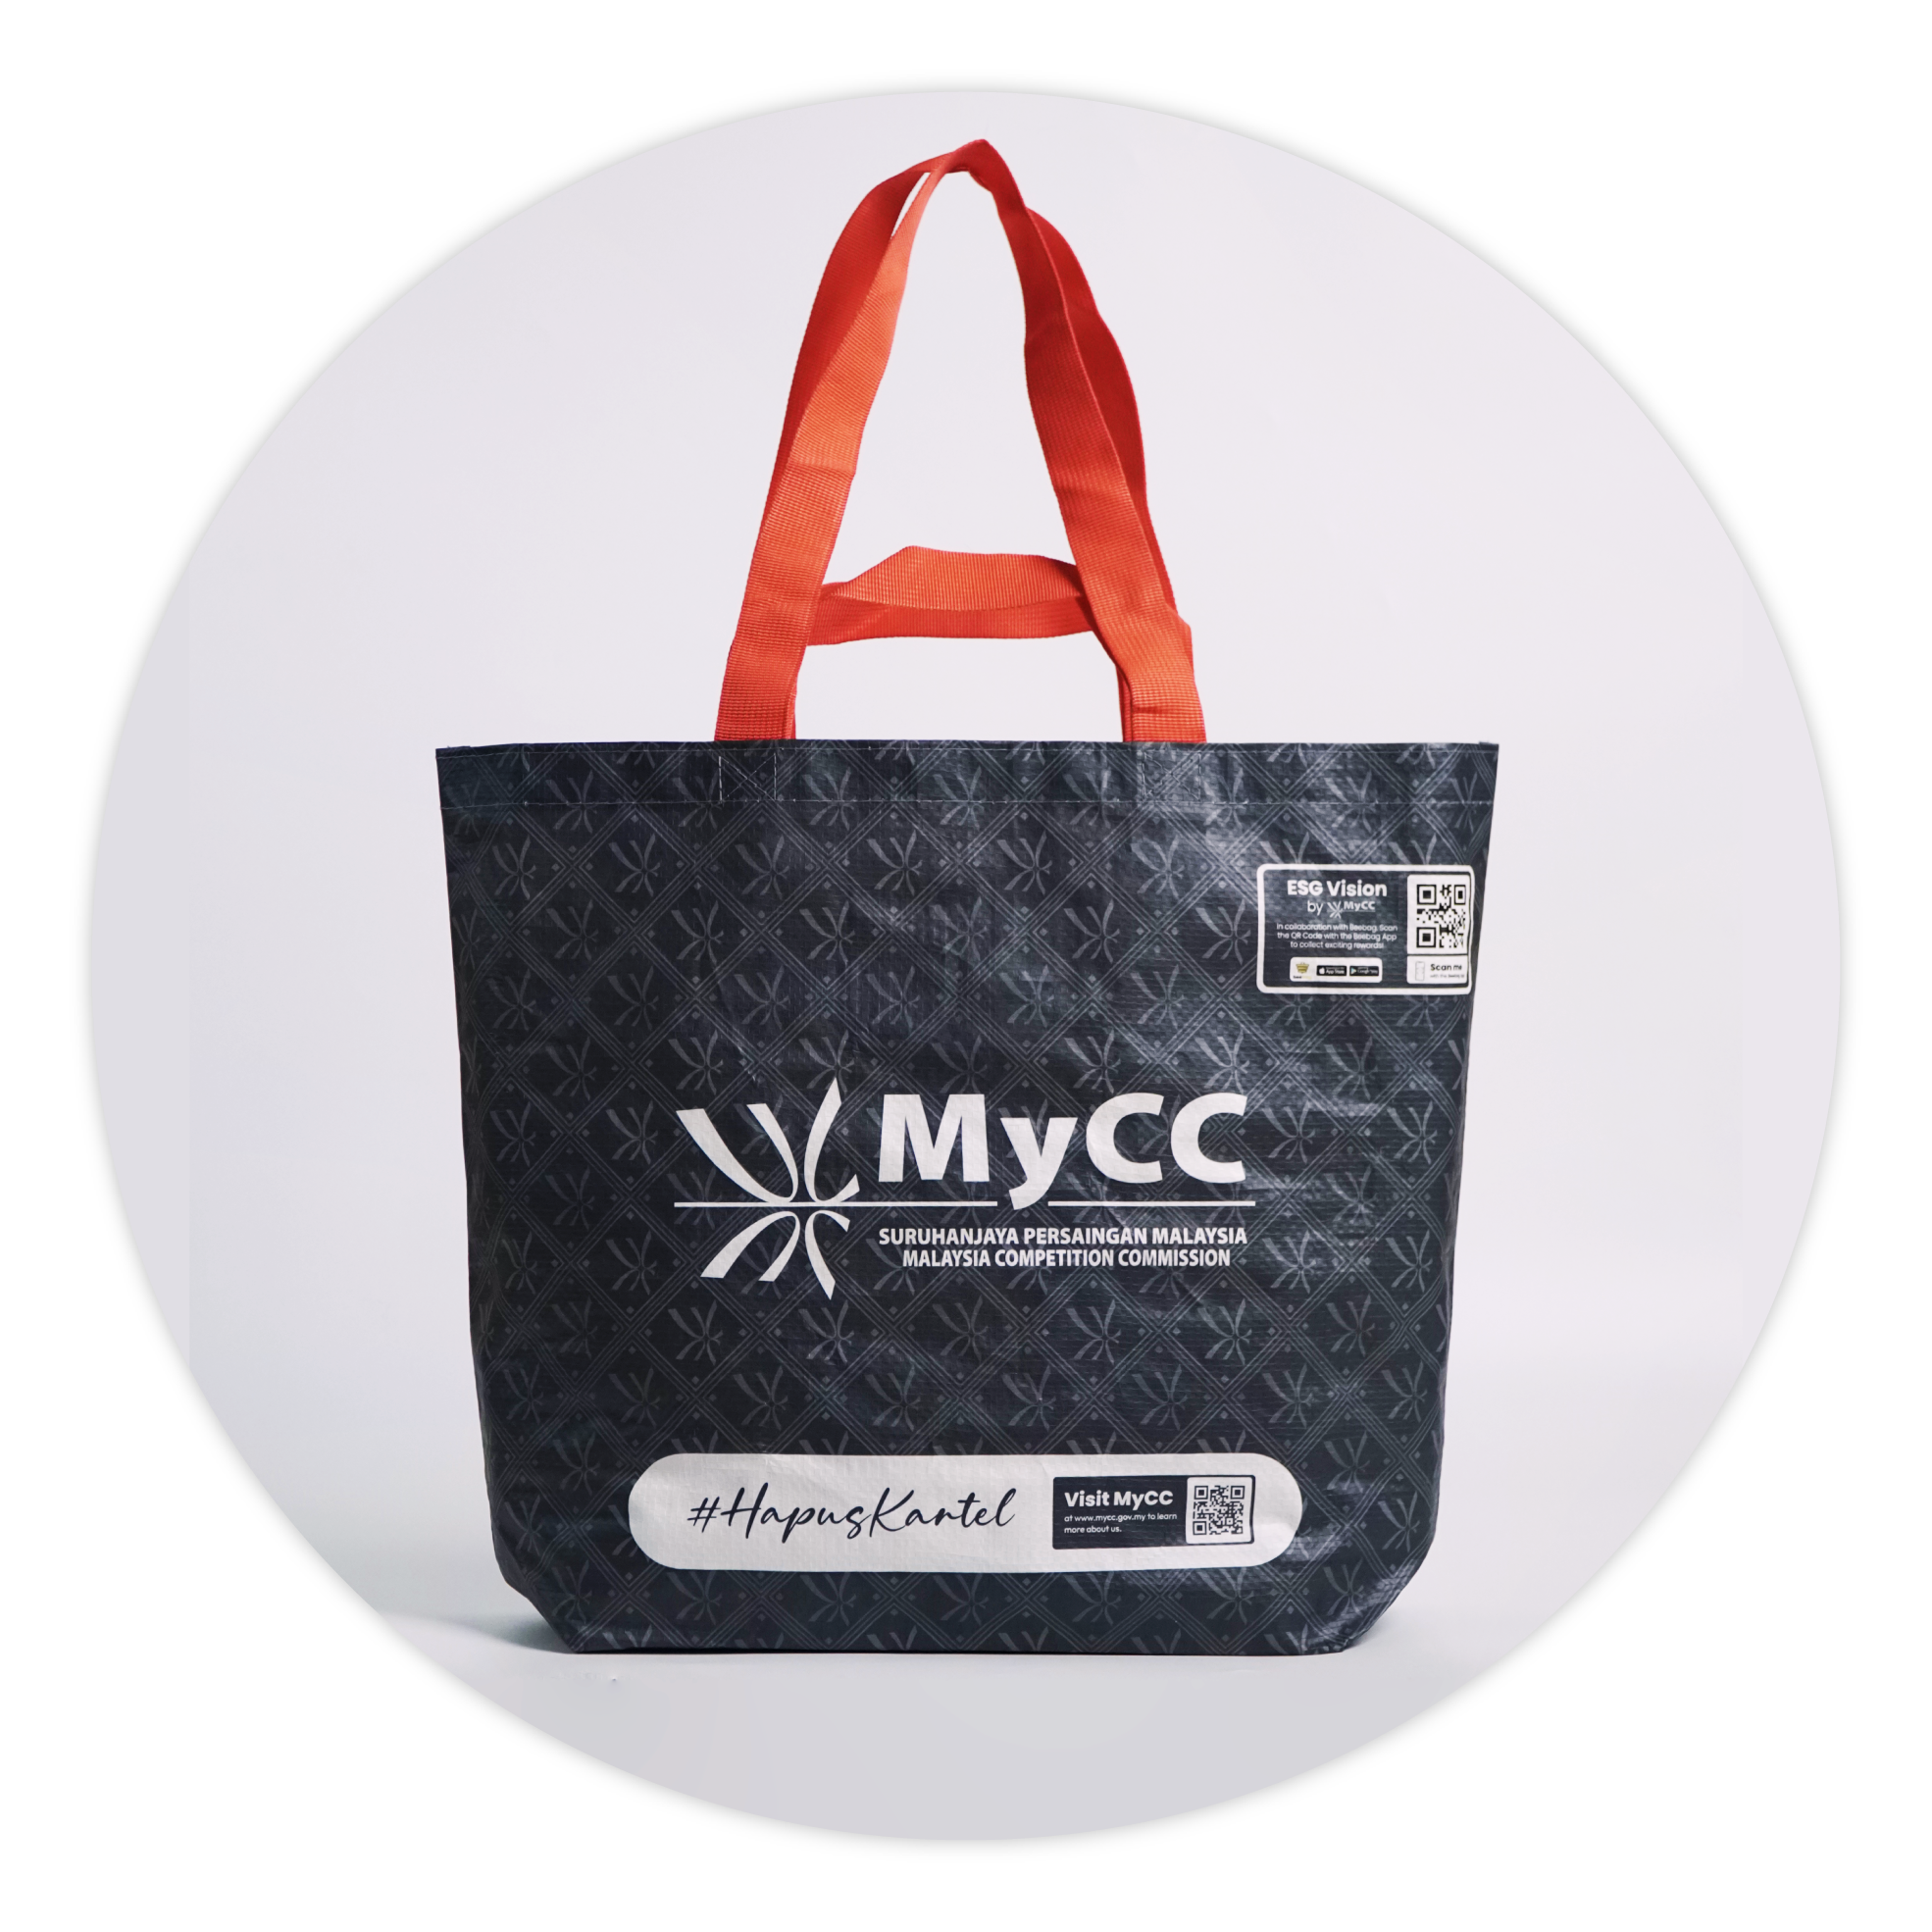 Suruhanjaya Persaingan Malaysia (MyCC) Smart Bag collaboration with Buzz for ESG Campaign (Environmen Social Governance Campaign)